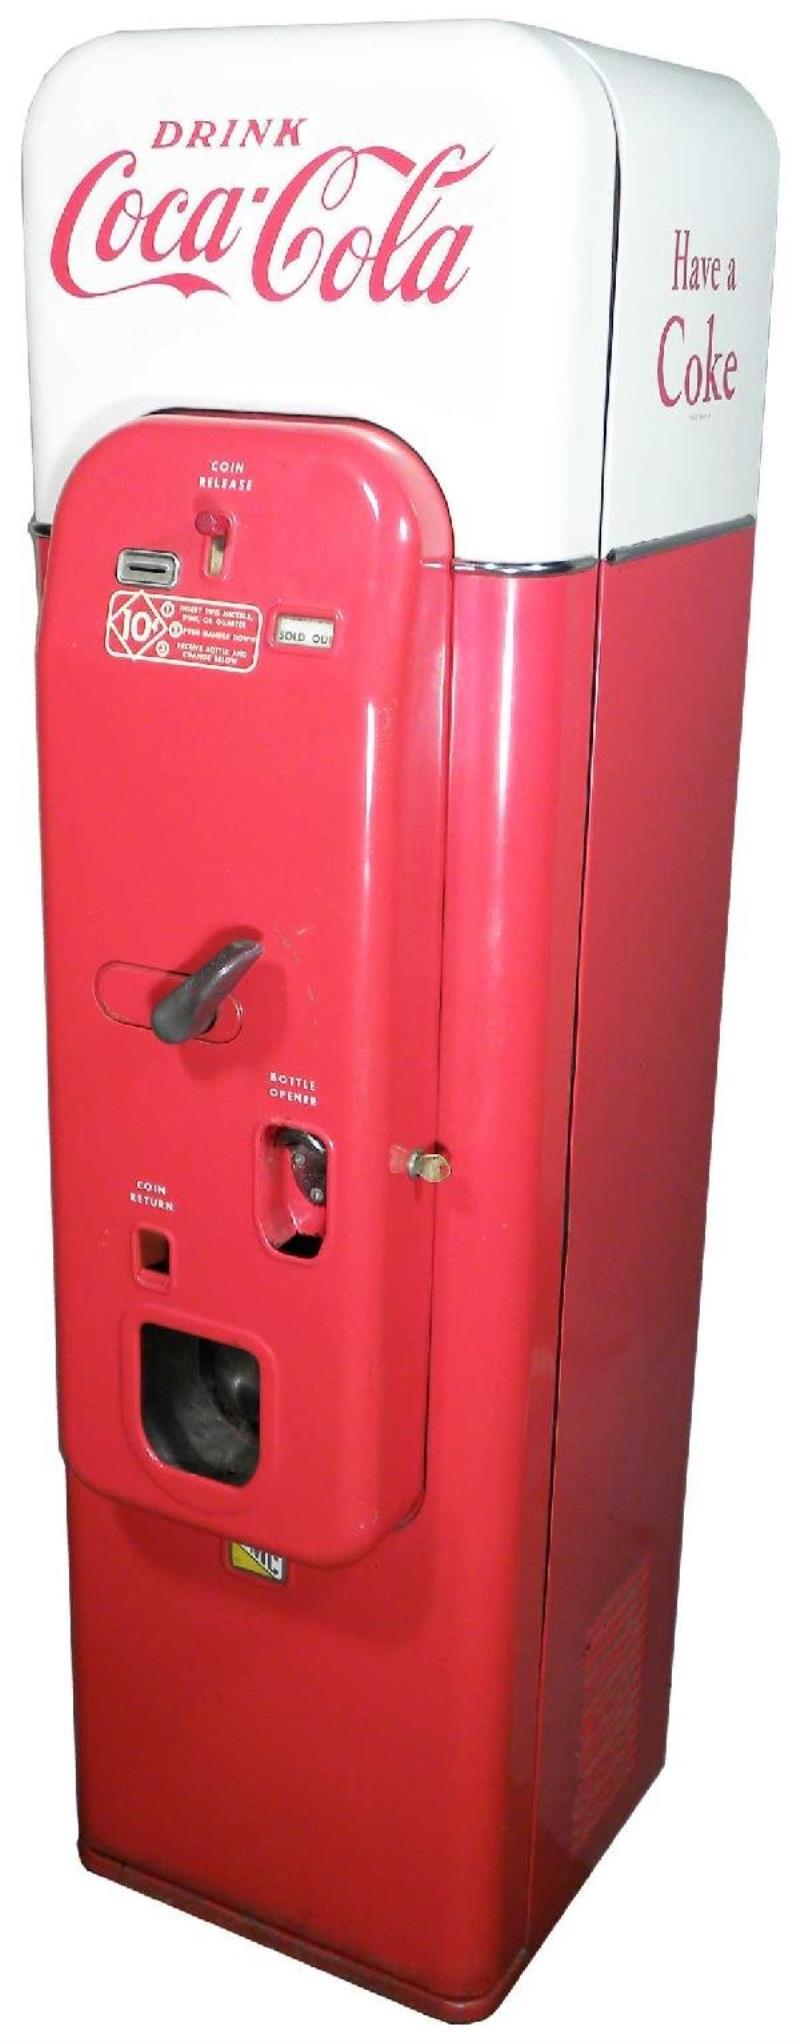 Coca Cola Vendorlator 44 Vending Machine